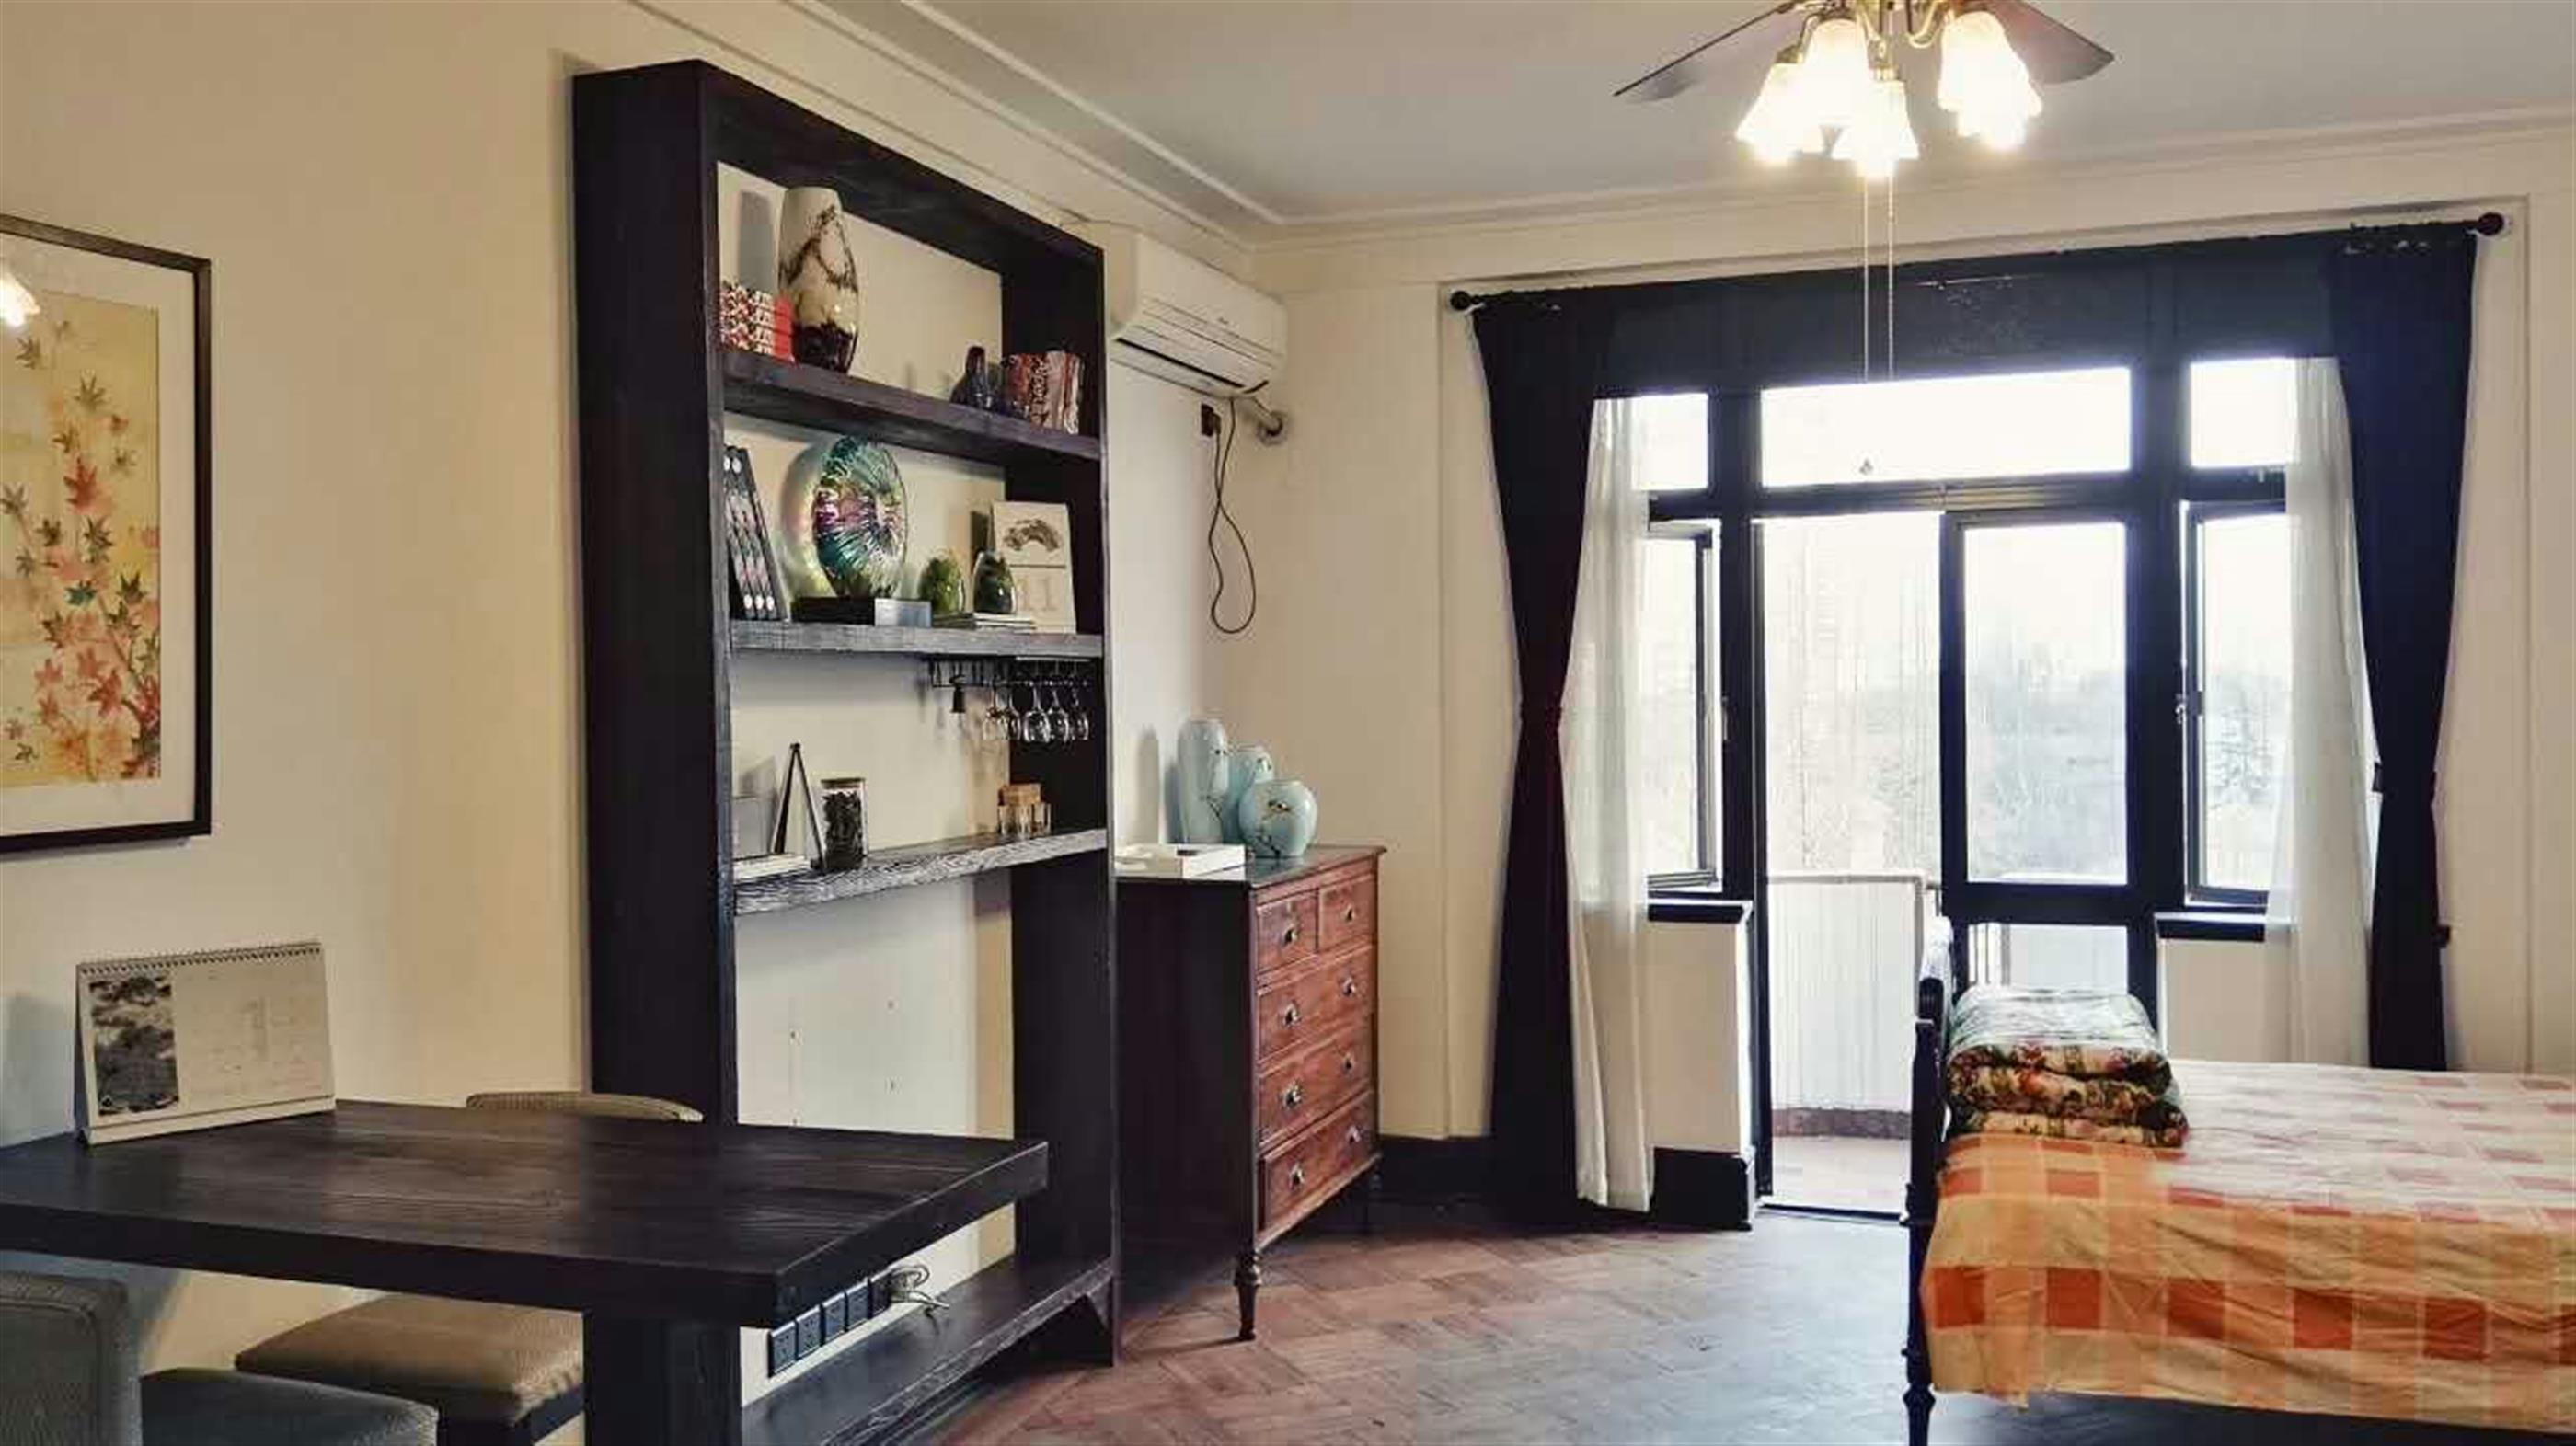 Cozy FFC Studio Apartment nr LN 1/7/10 for Rent in Shanghai